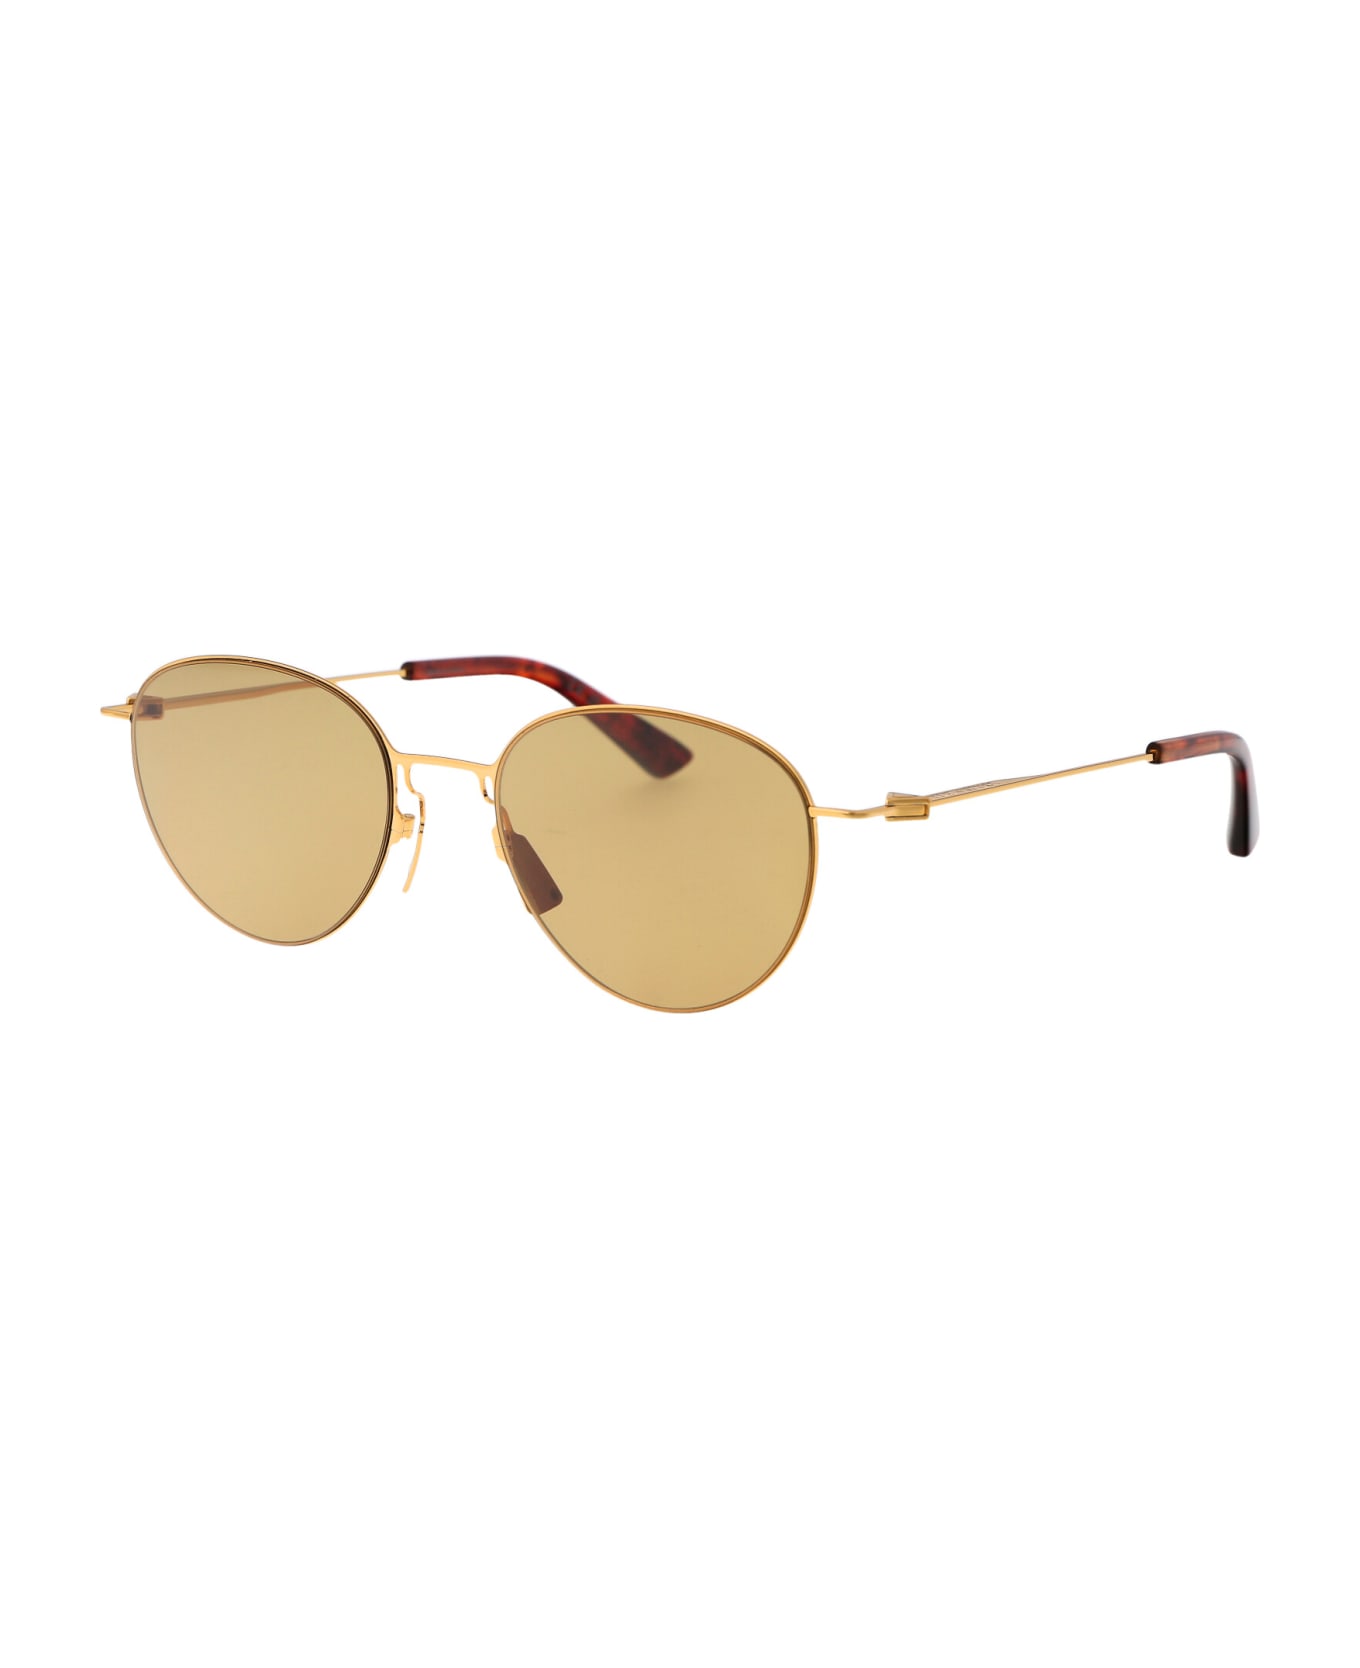 Bottega Veneta Eyewear Bv1268s Sunglasses - 004 GOLD GOLD BROWN